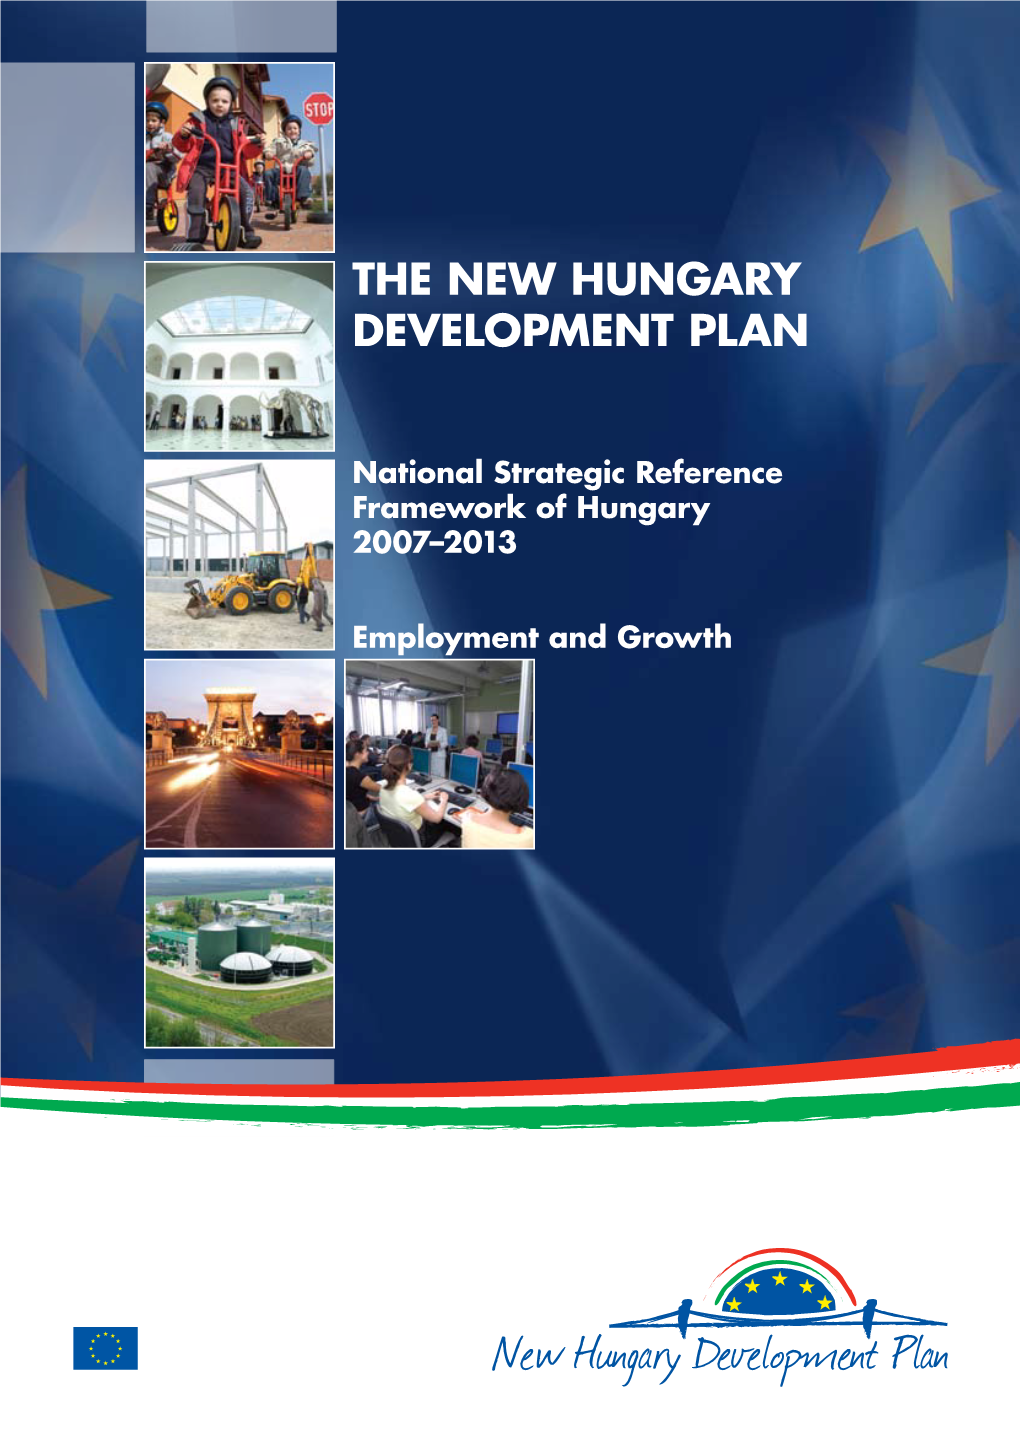 The New Hungary Development Plan 2007-2013